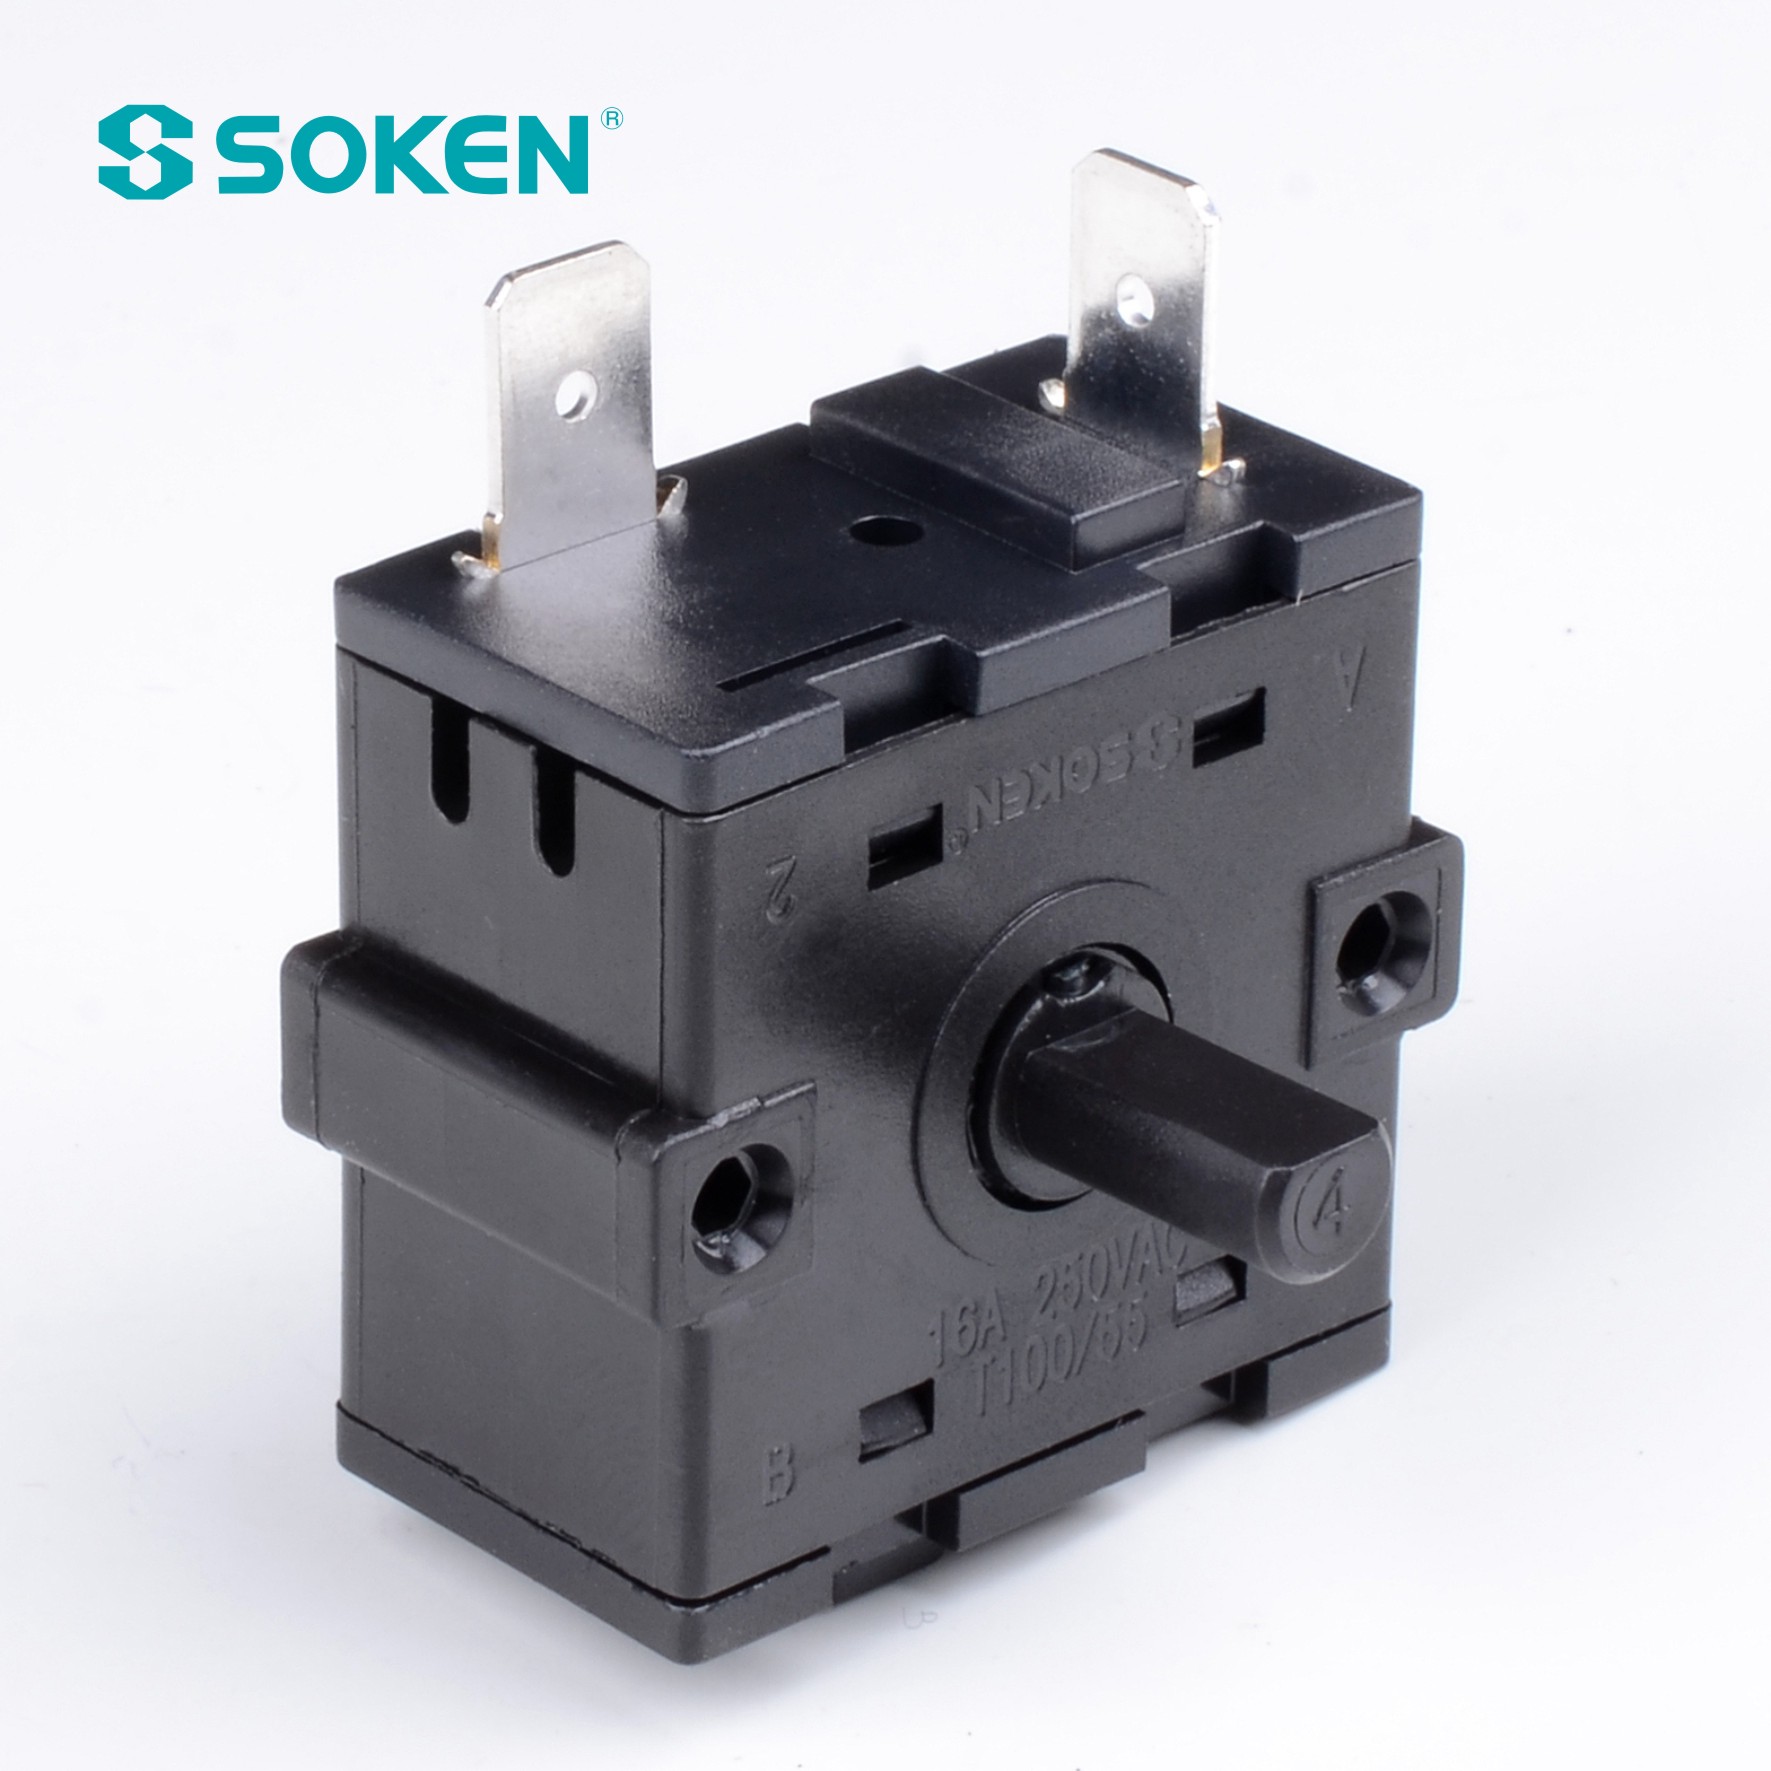 Soken 4 Switch Rotary Position bo Oven Rt232-1